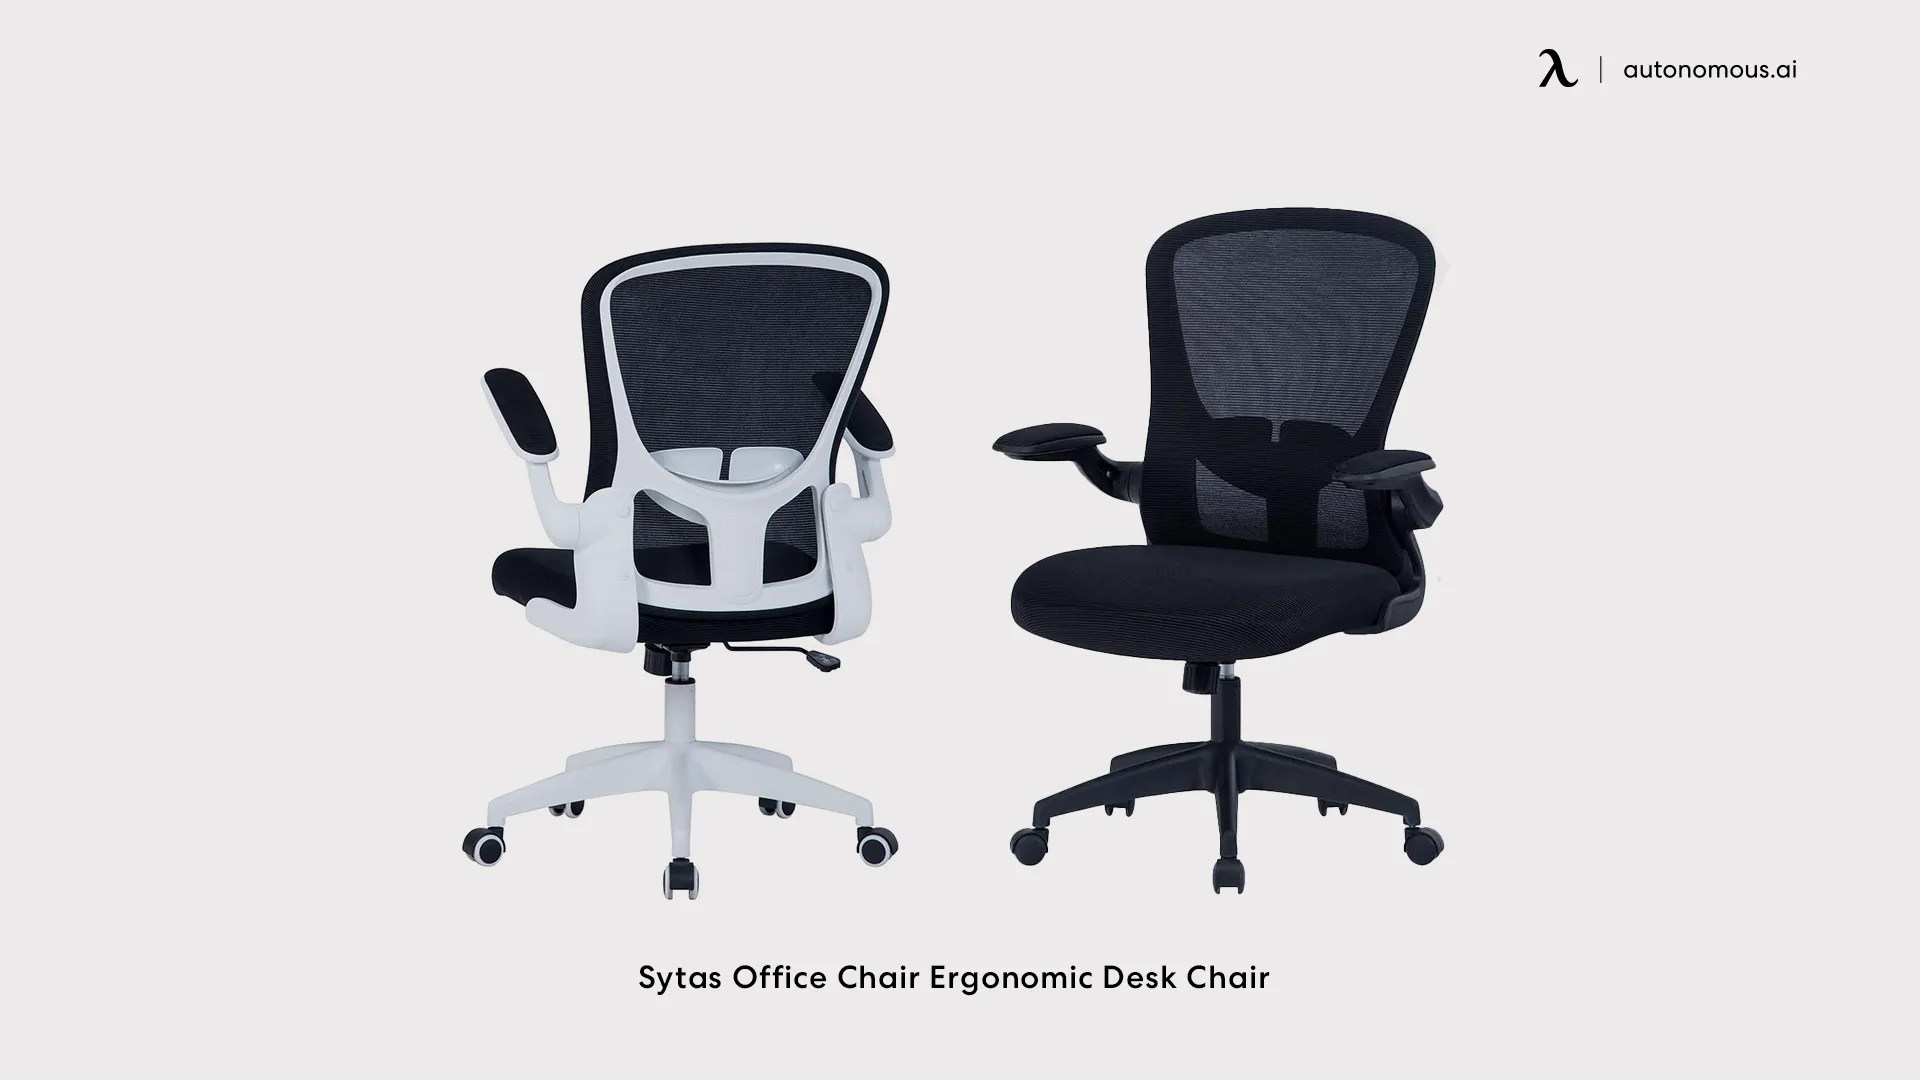 Sytas Office Chair Ergonomic Desk Chair